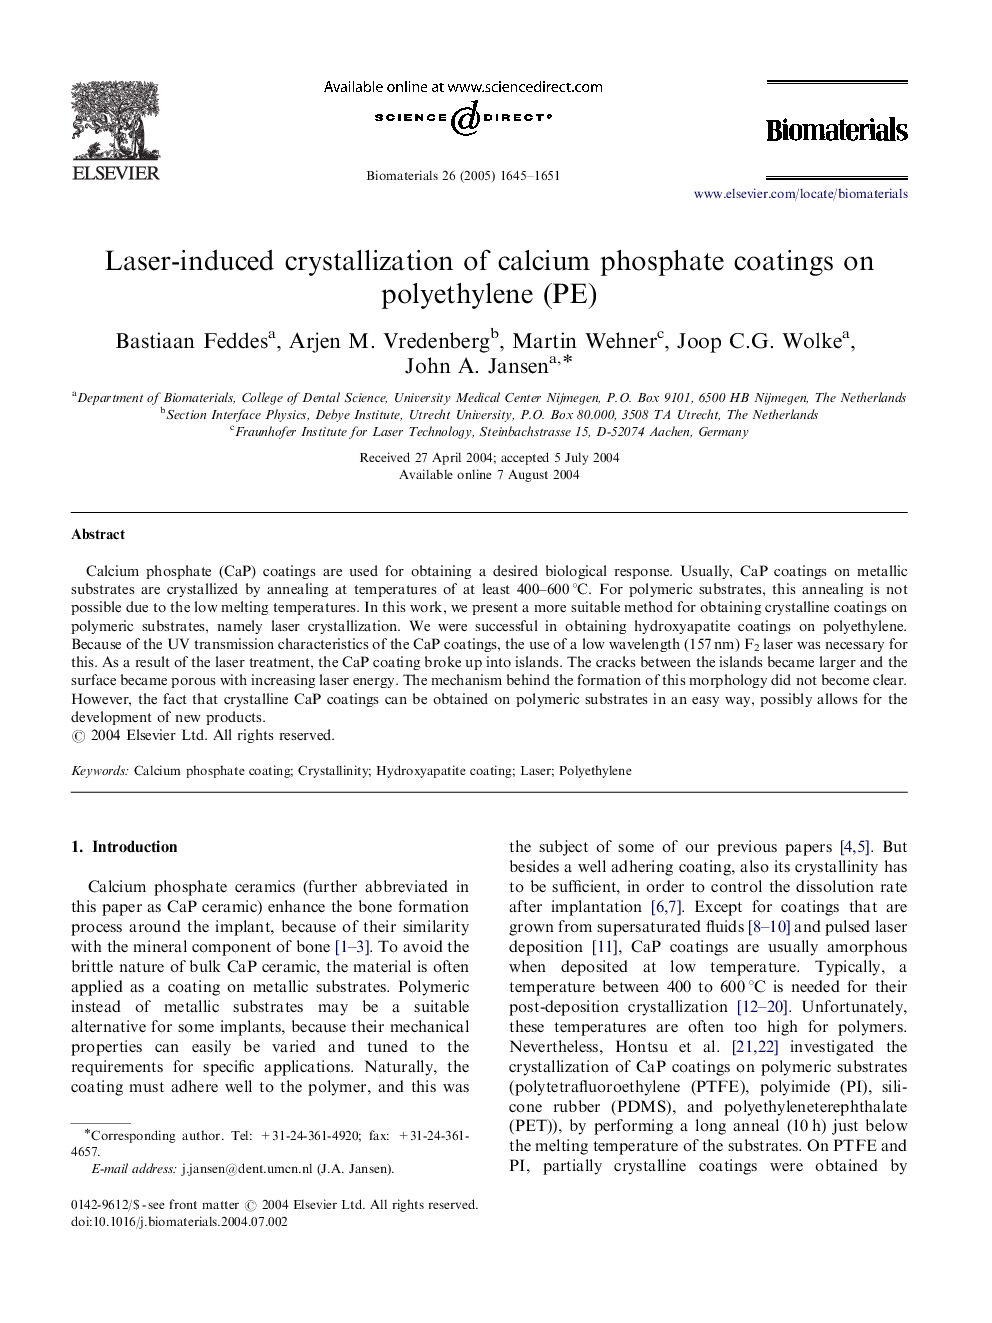 Laser-induced crystallization of calcium phosphate coatings on polyethylene (PE)